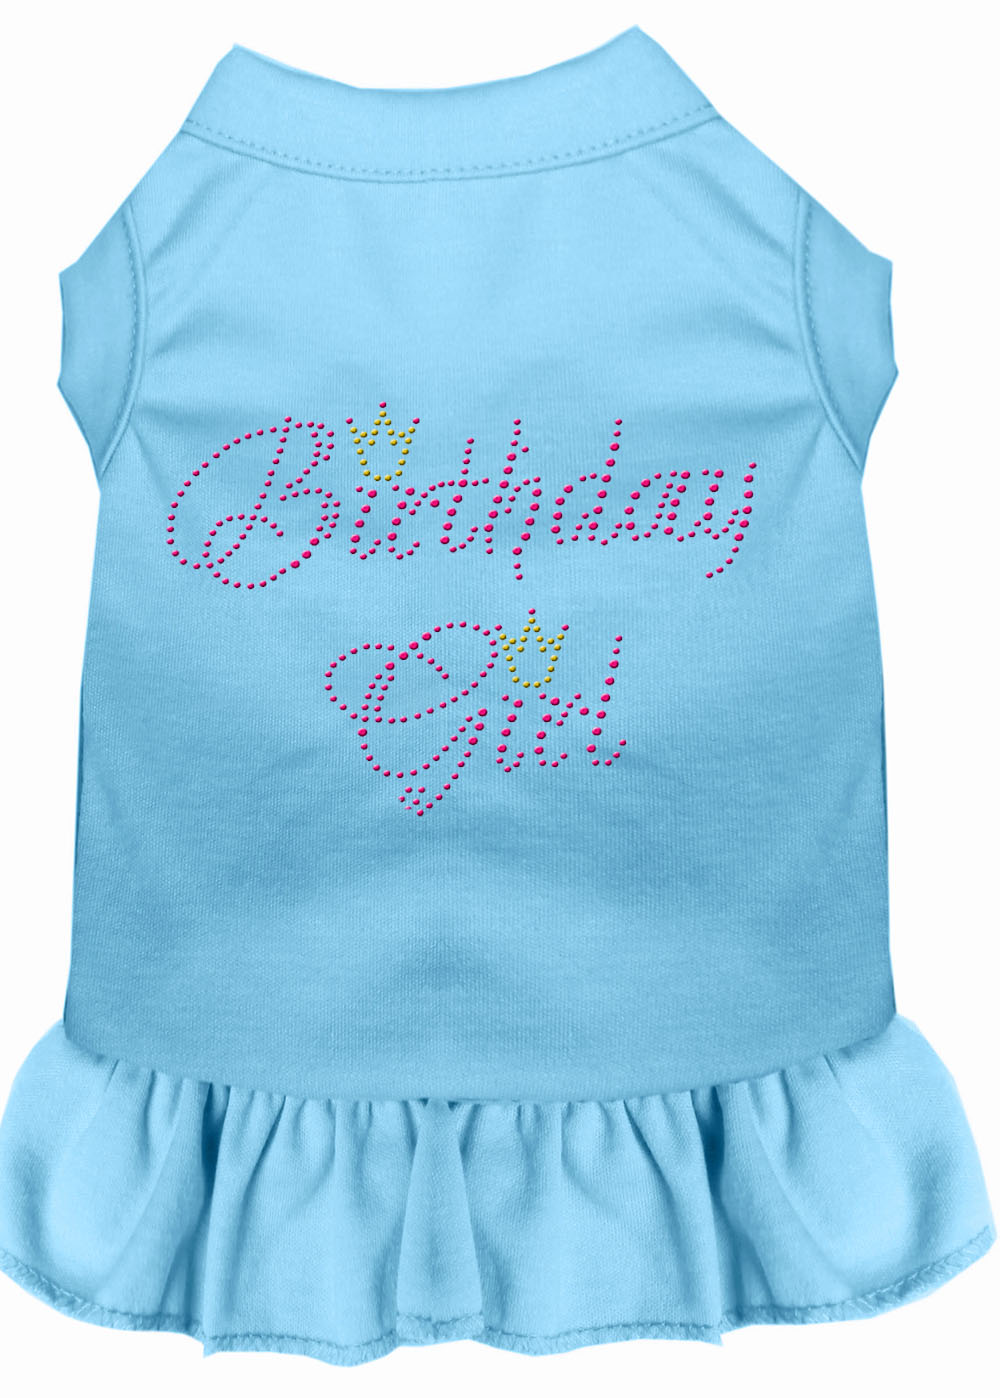 Birthday Girl Rhinestone Dress Baby Blue XS